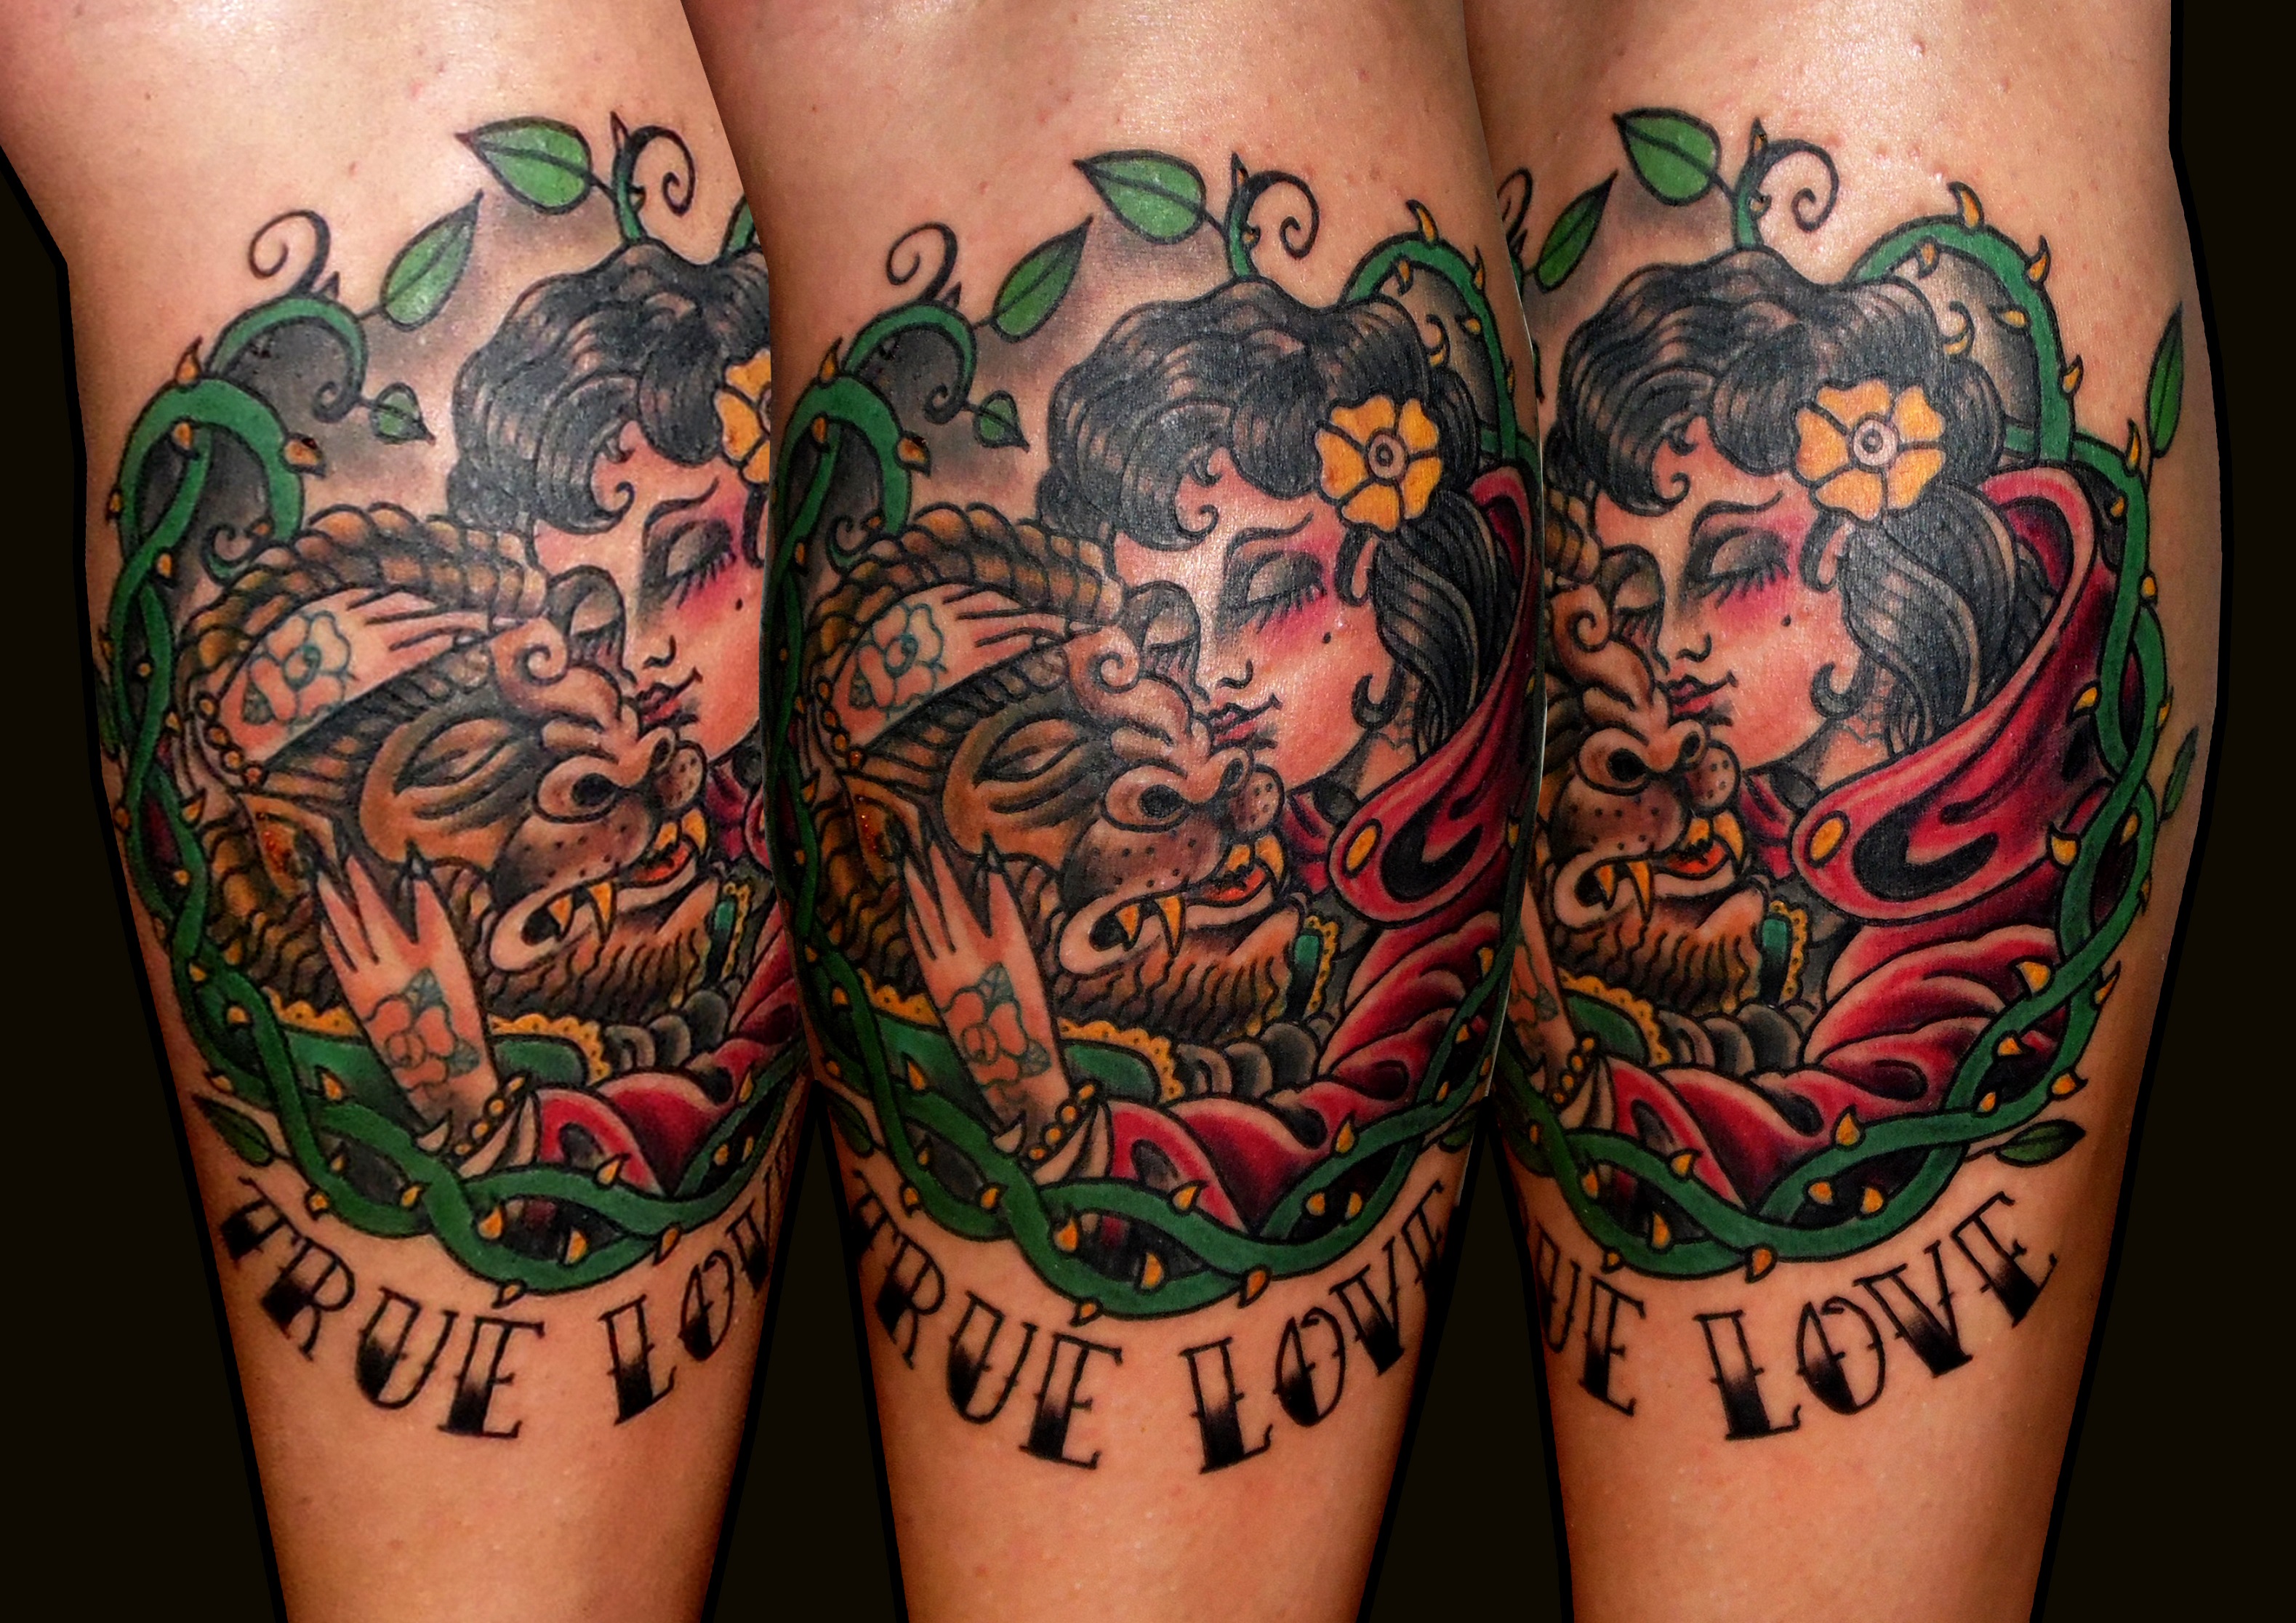 tradicional tattoo bella bestia tatuajes huesca jaca 13depicas trecedepicas madein13 gemelo pierna color